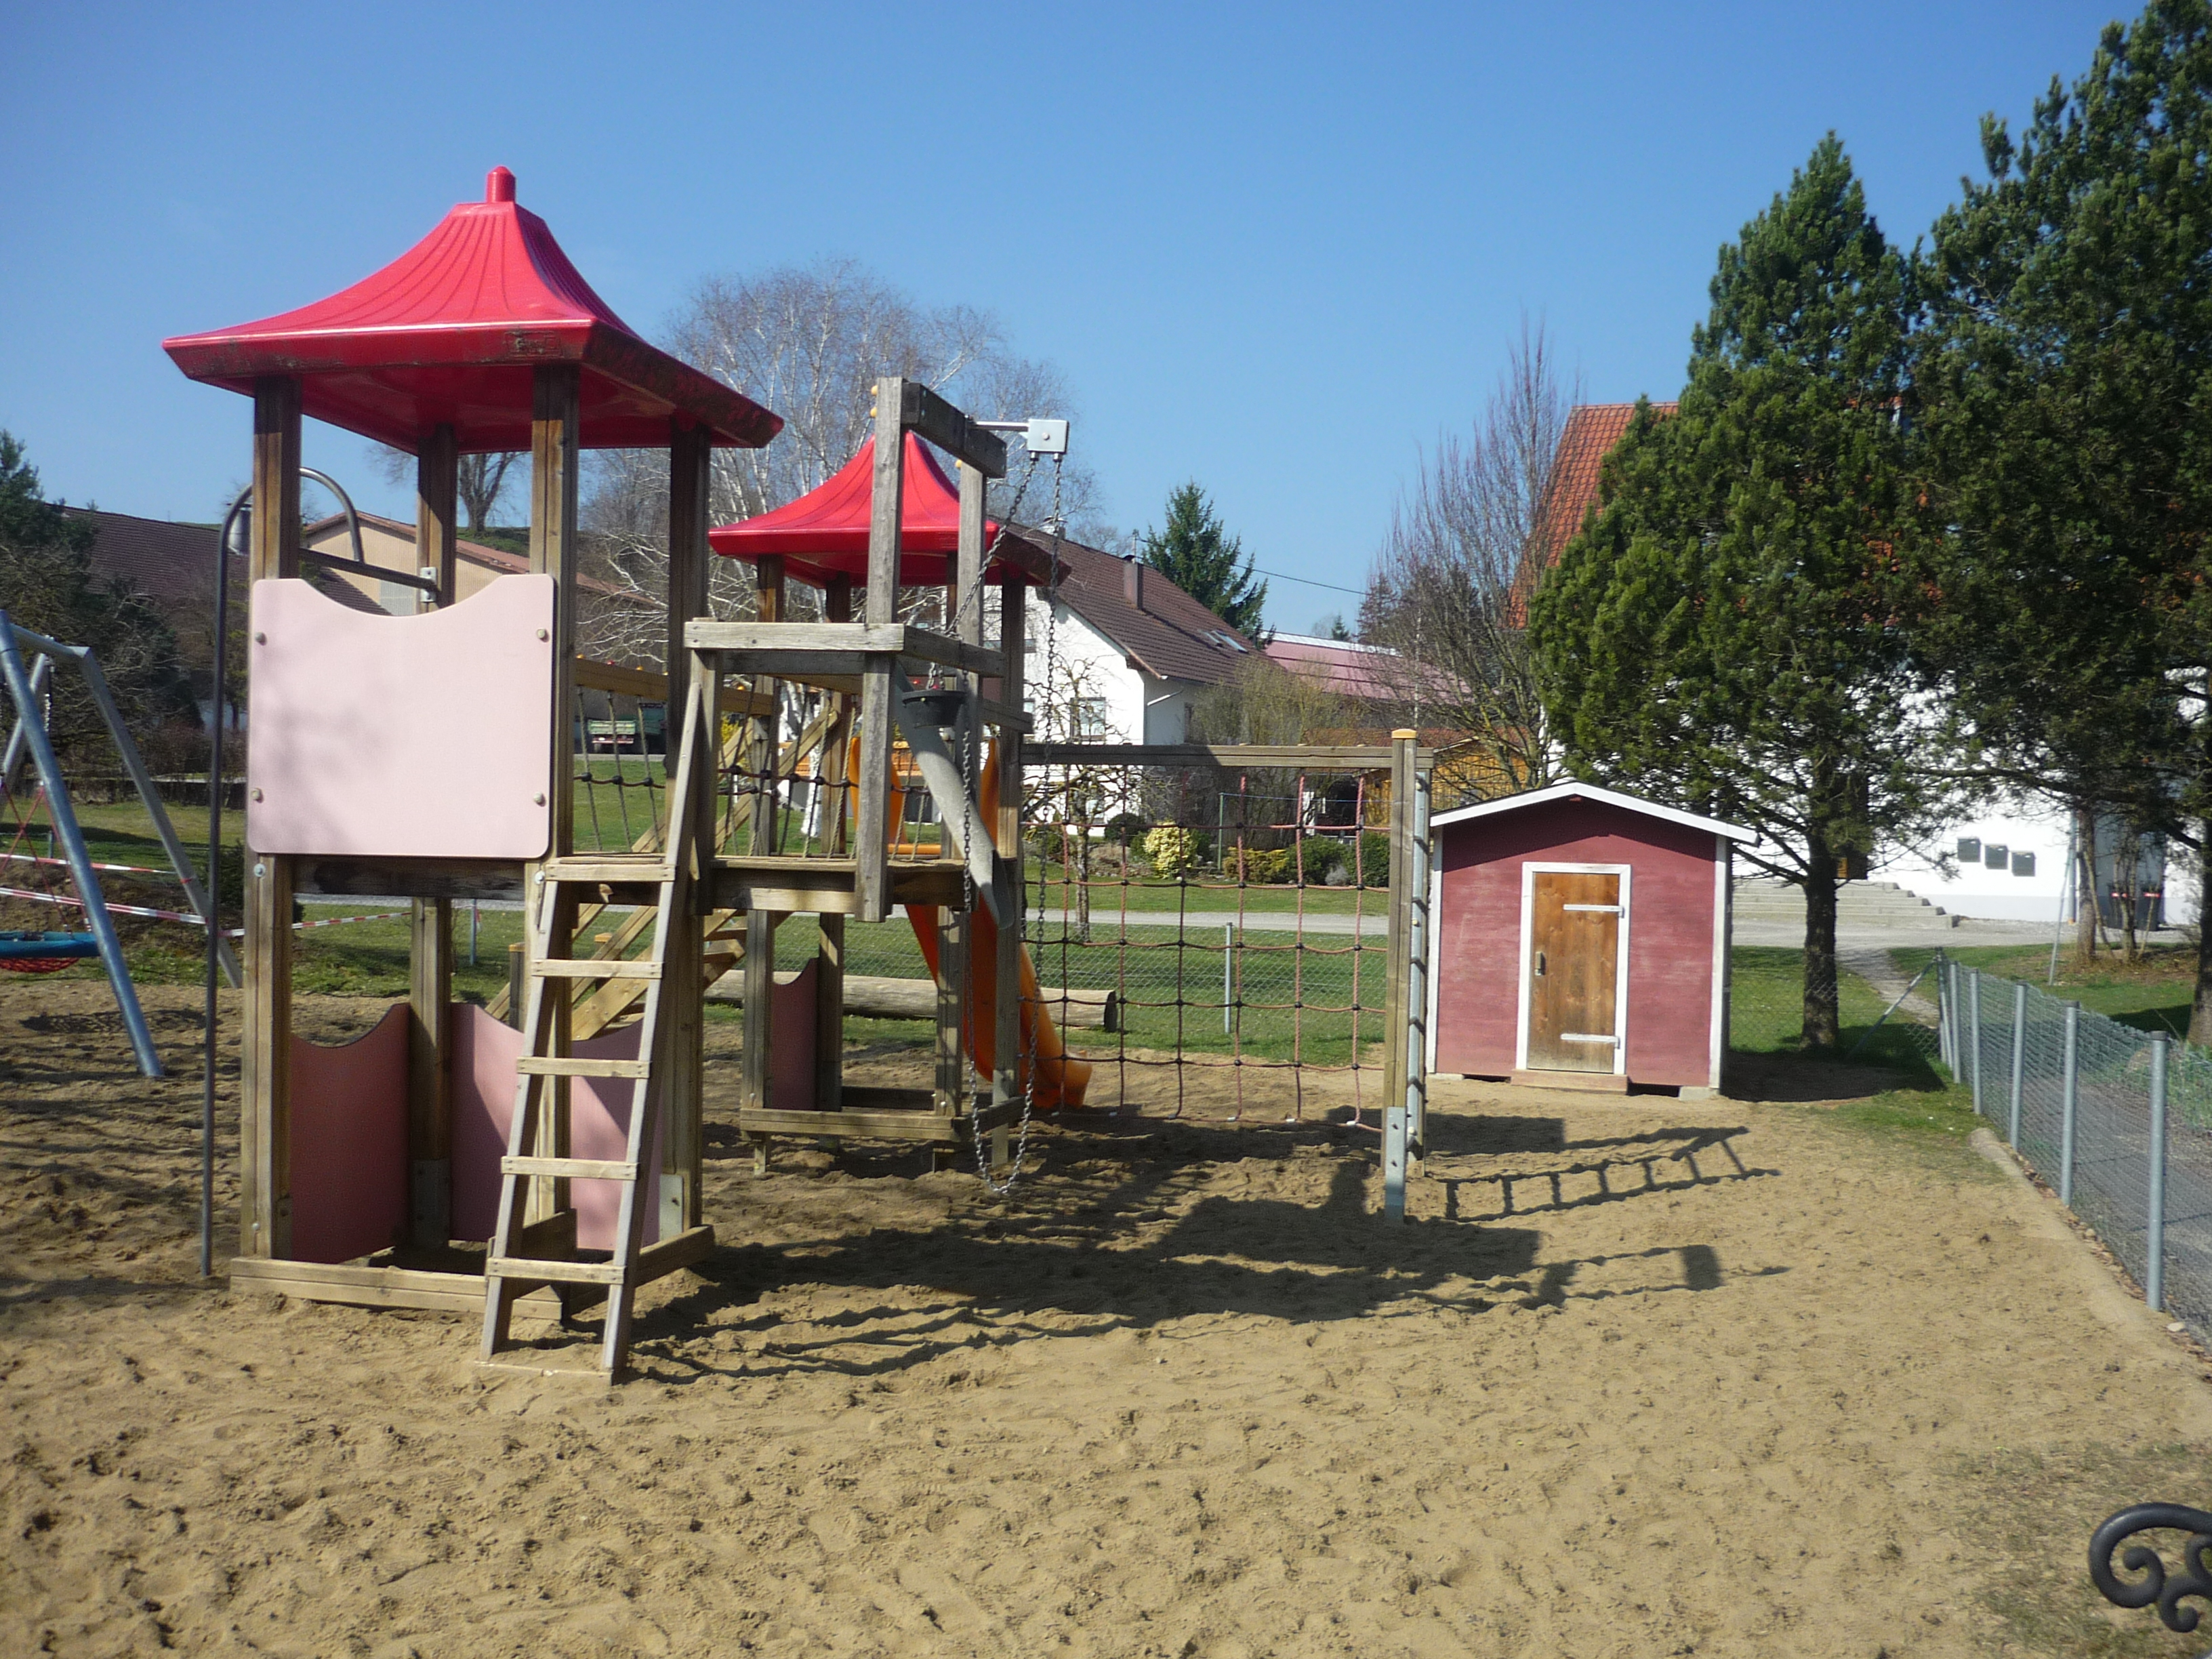   Spielplatz Rötenbach 